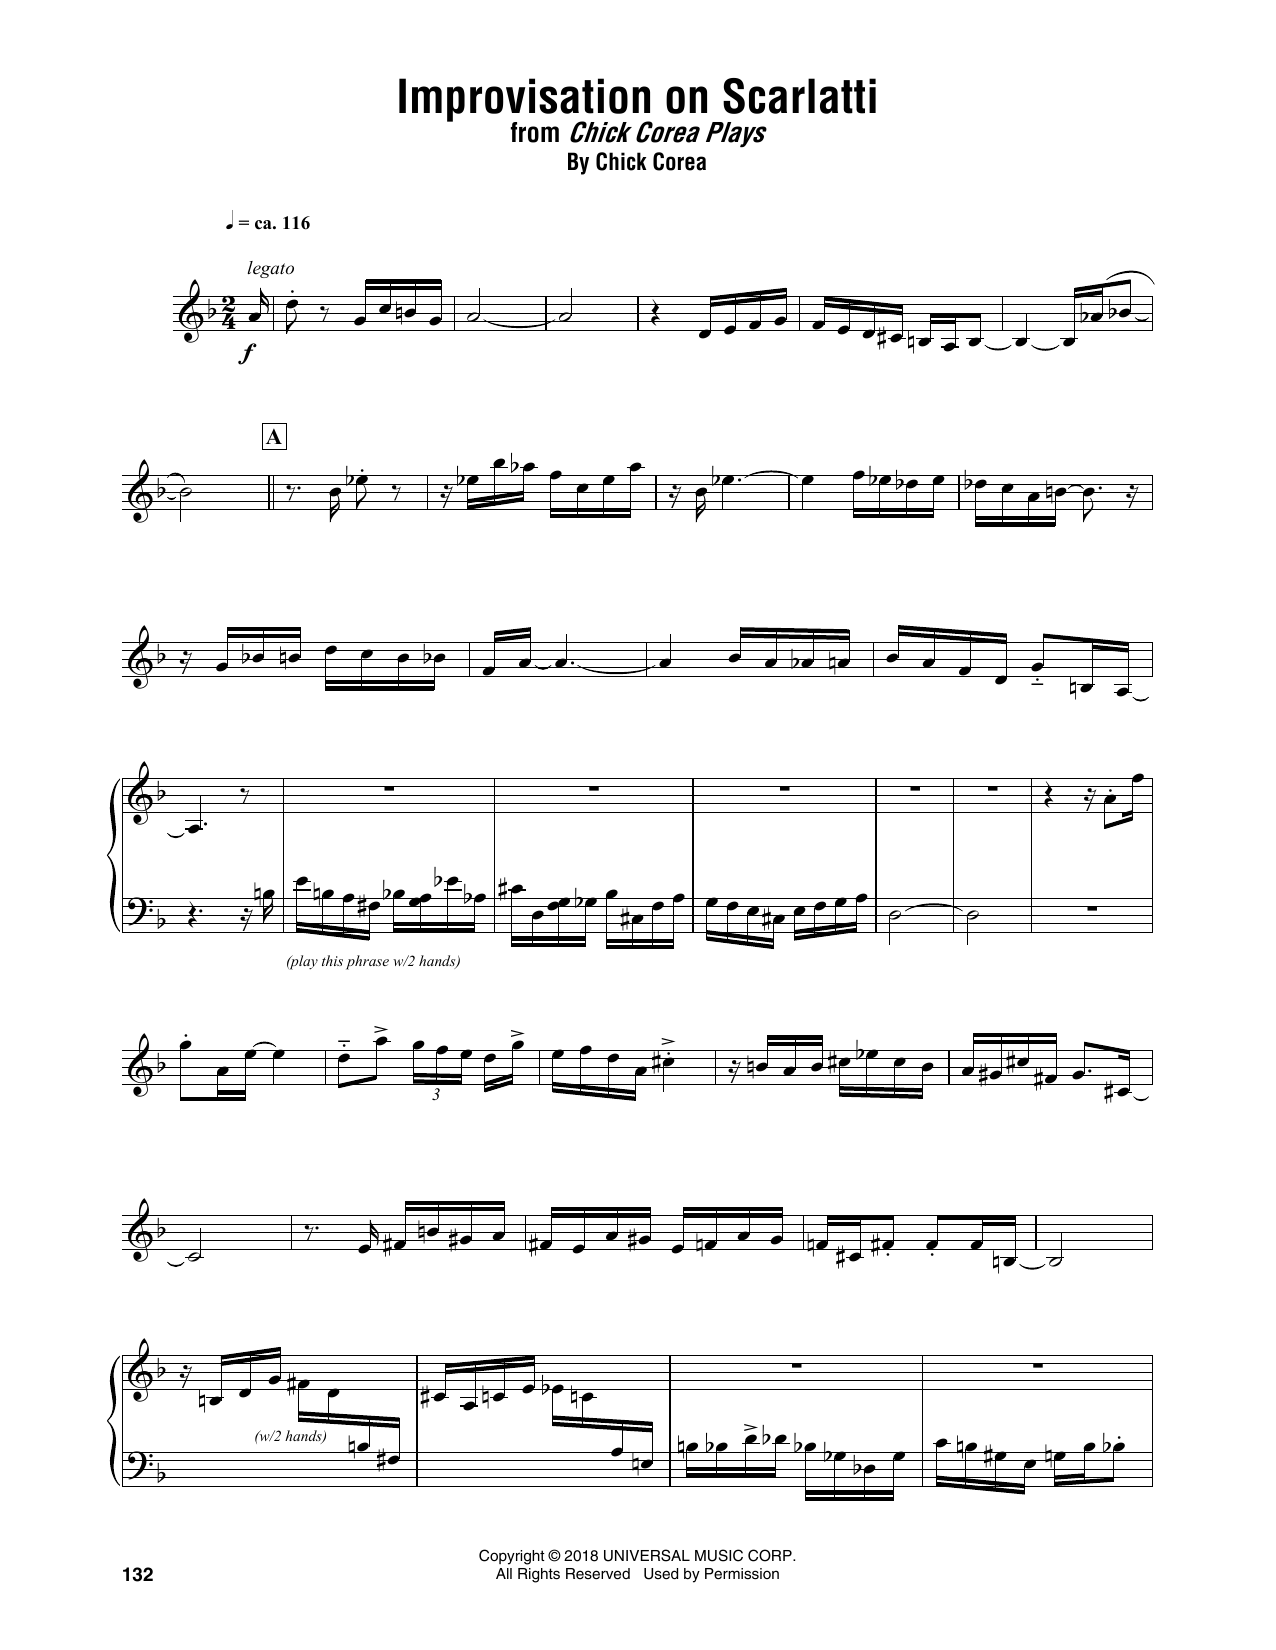 Chick Corea Improvisation On Scarlatti Sheet Music Notes & Chords for Piano Transcription - Download or Print PDF